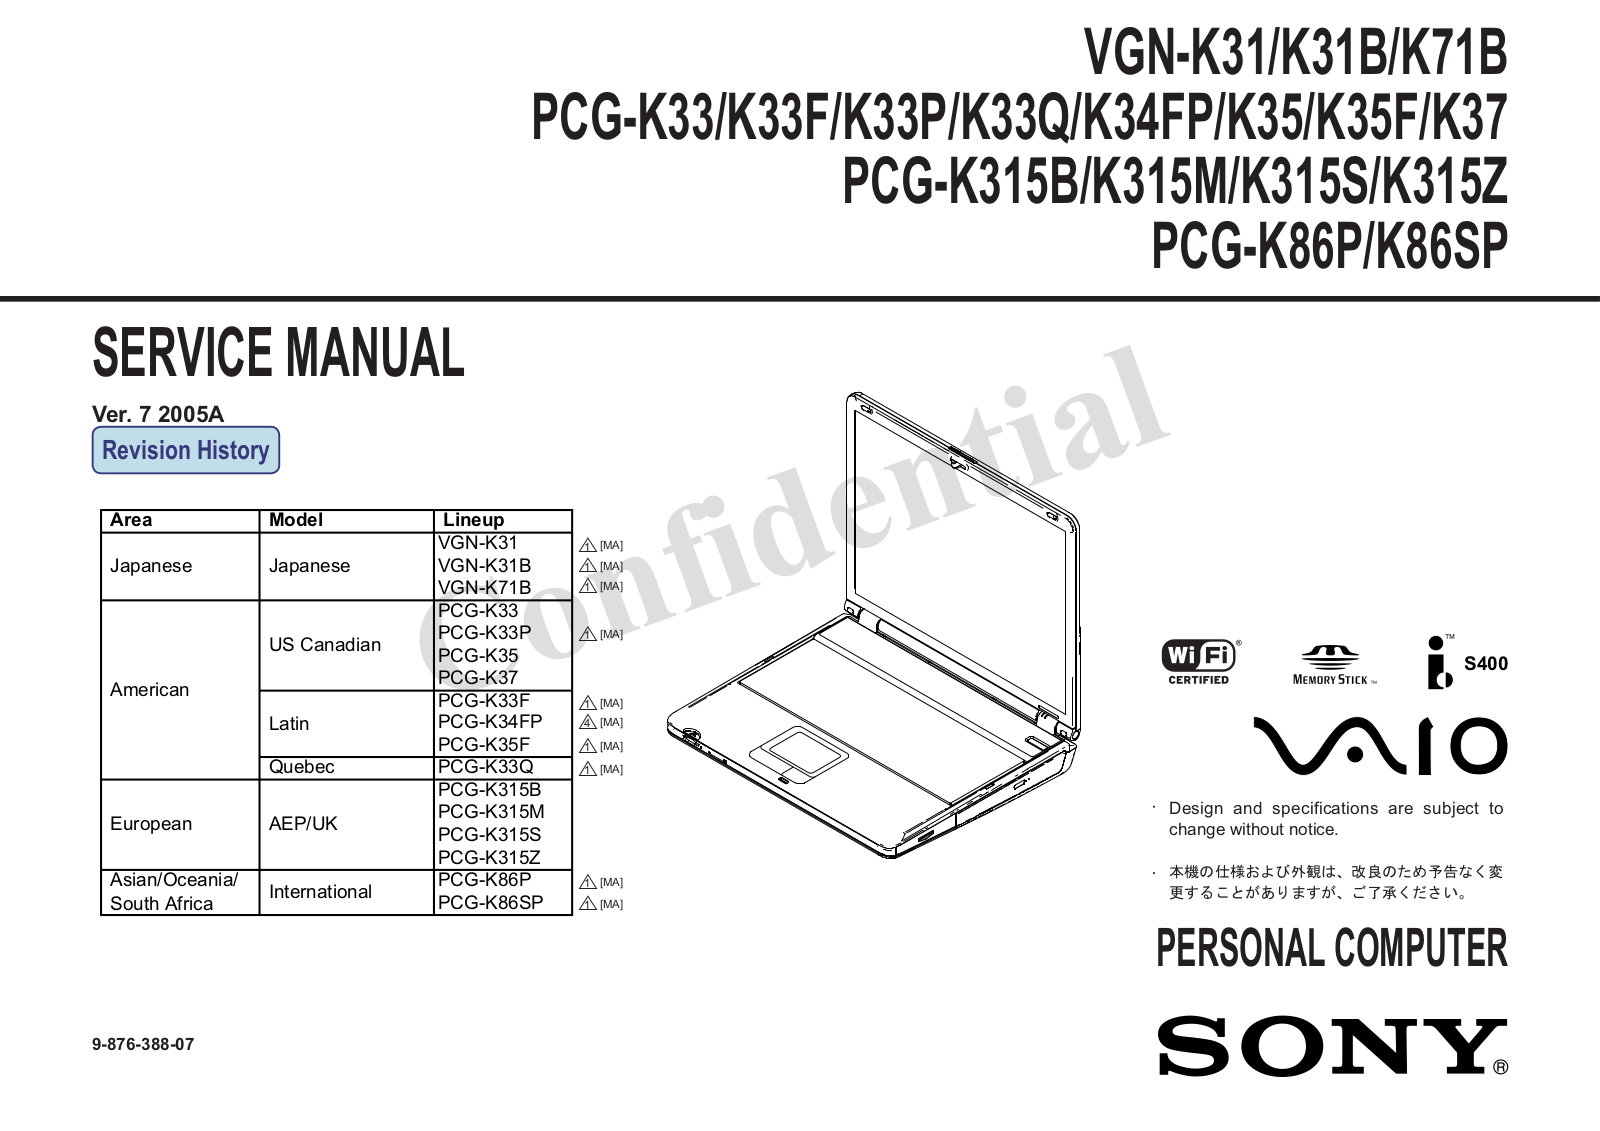 Sony PCG-K37, PCG-K35F, PCG-K35, PCG-K34FP, PCG-K315Z Service Manual